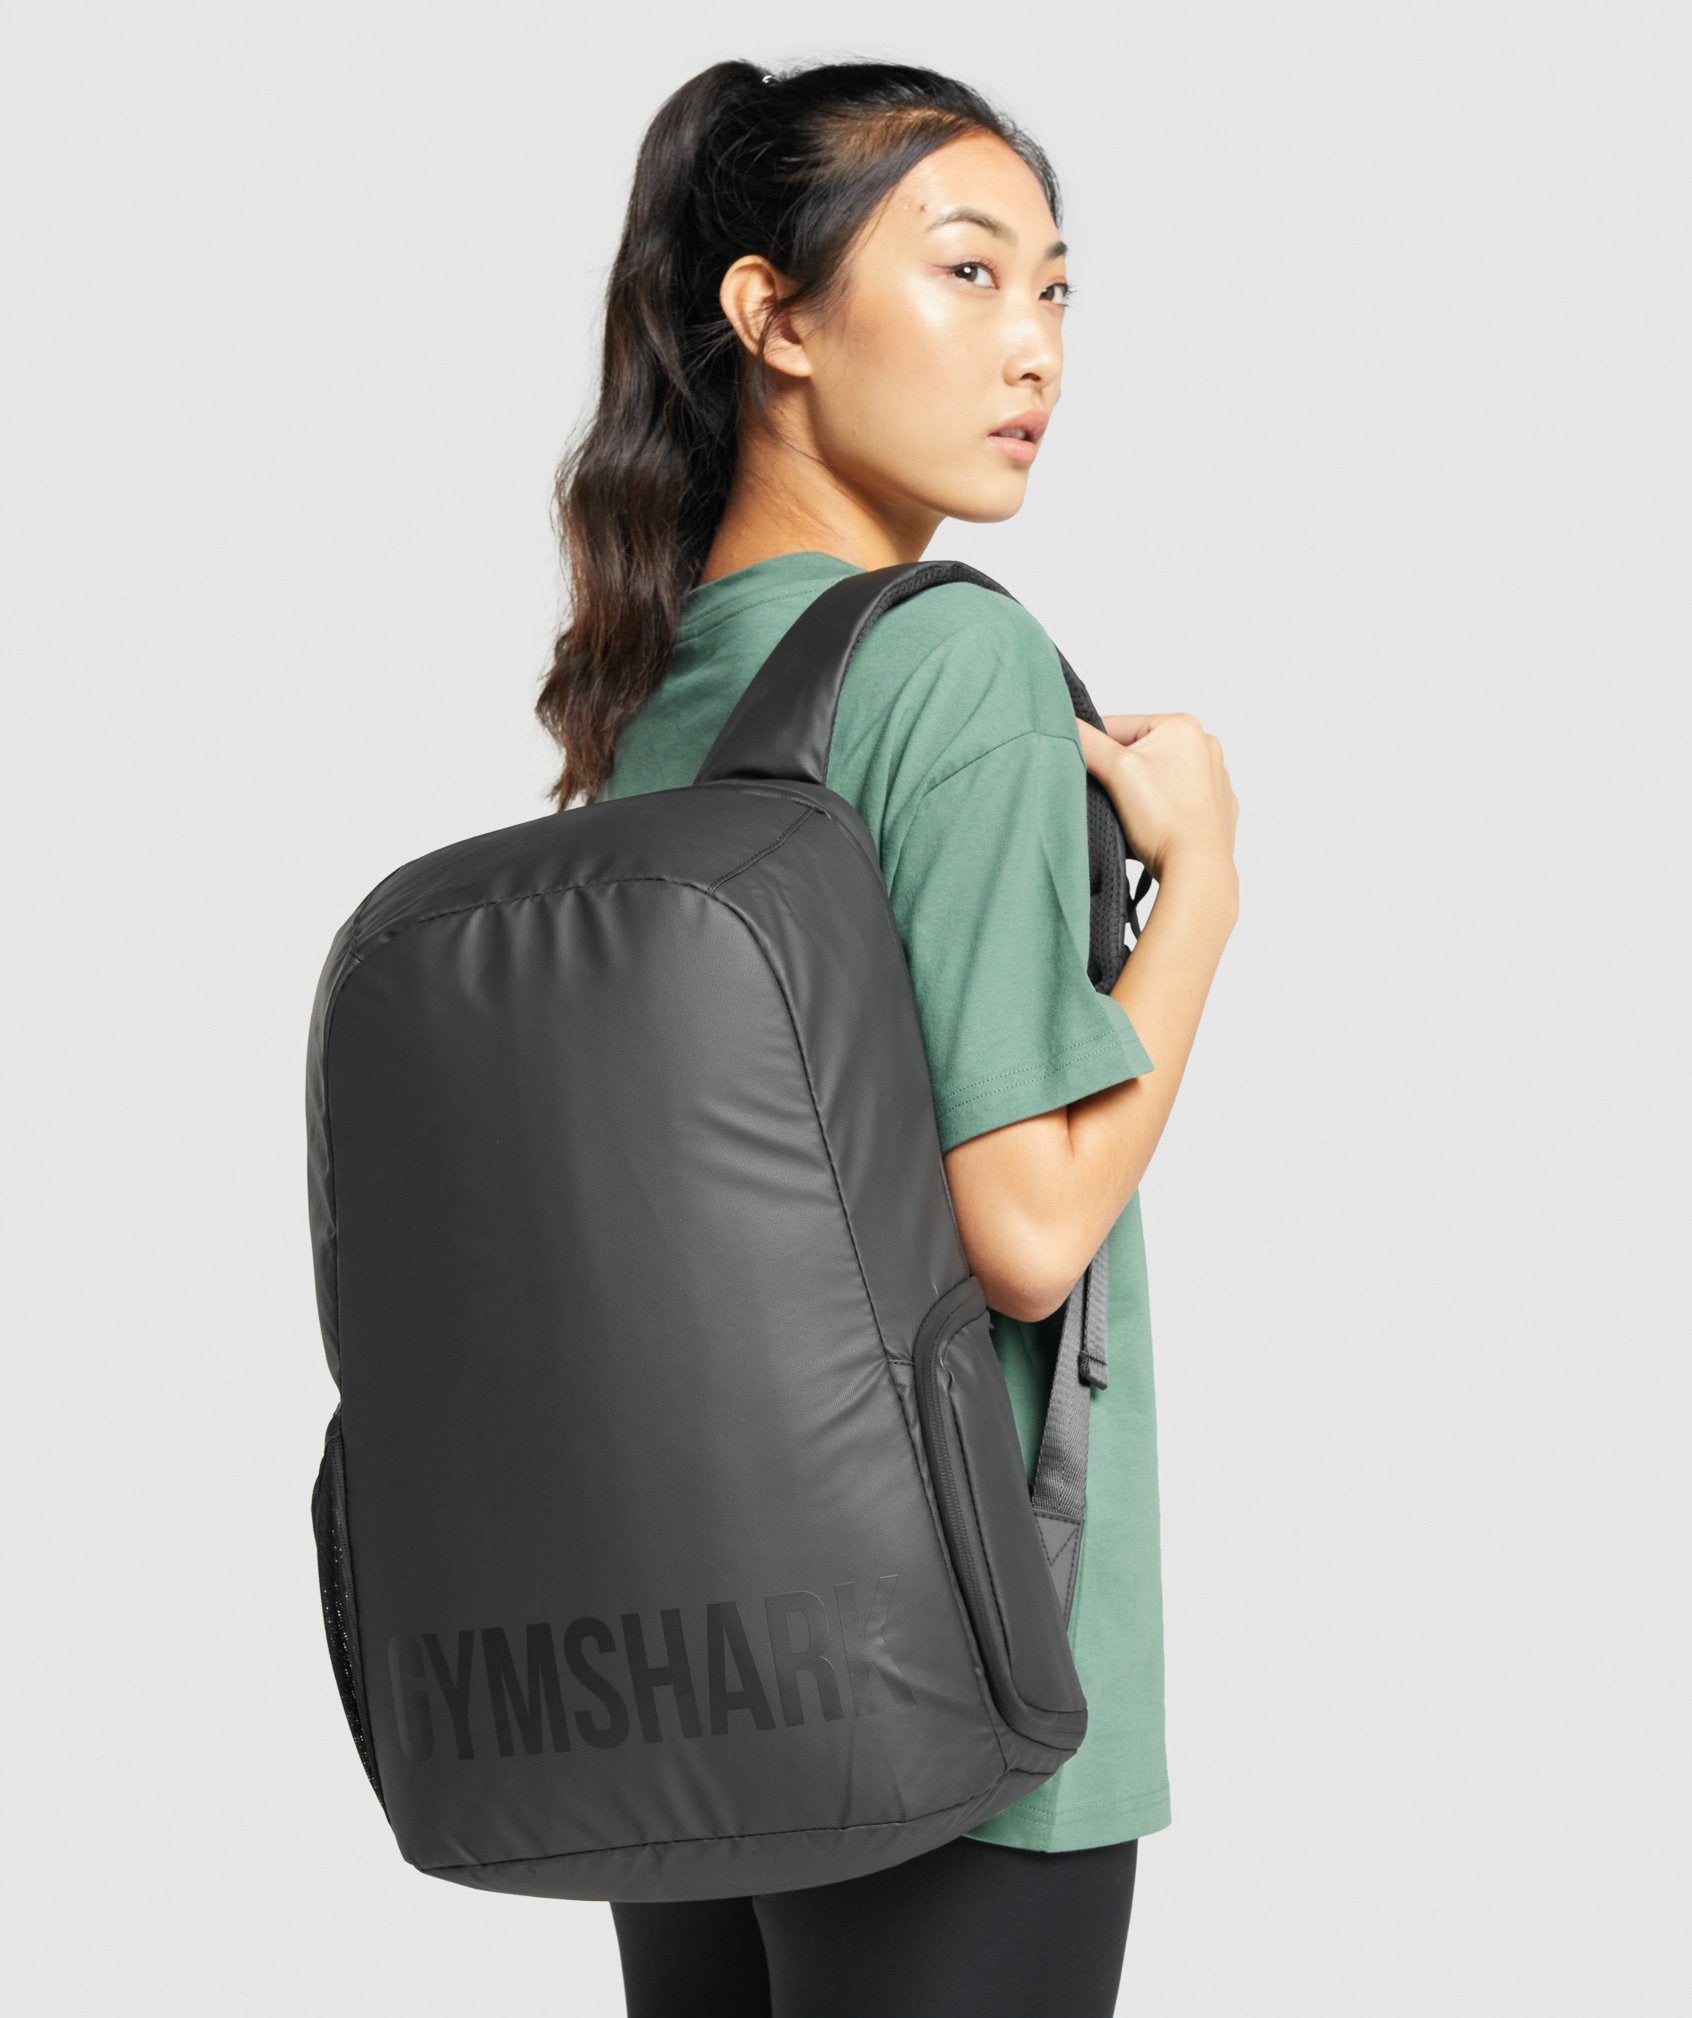 X-Series 0.1 Backpack in Black - view 1